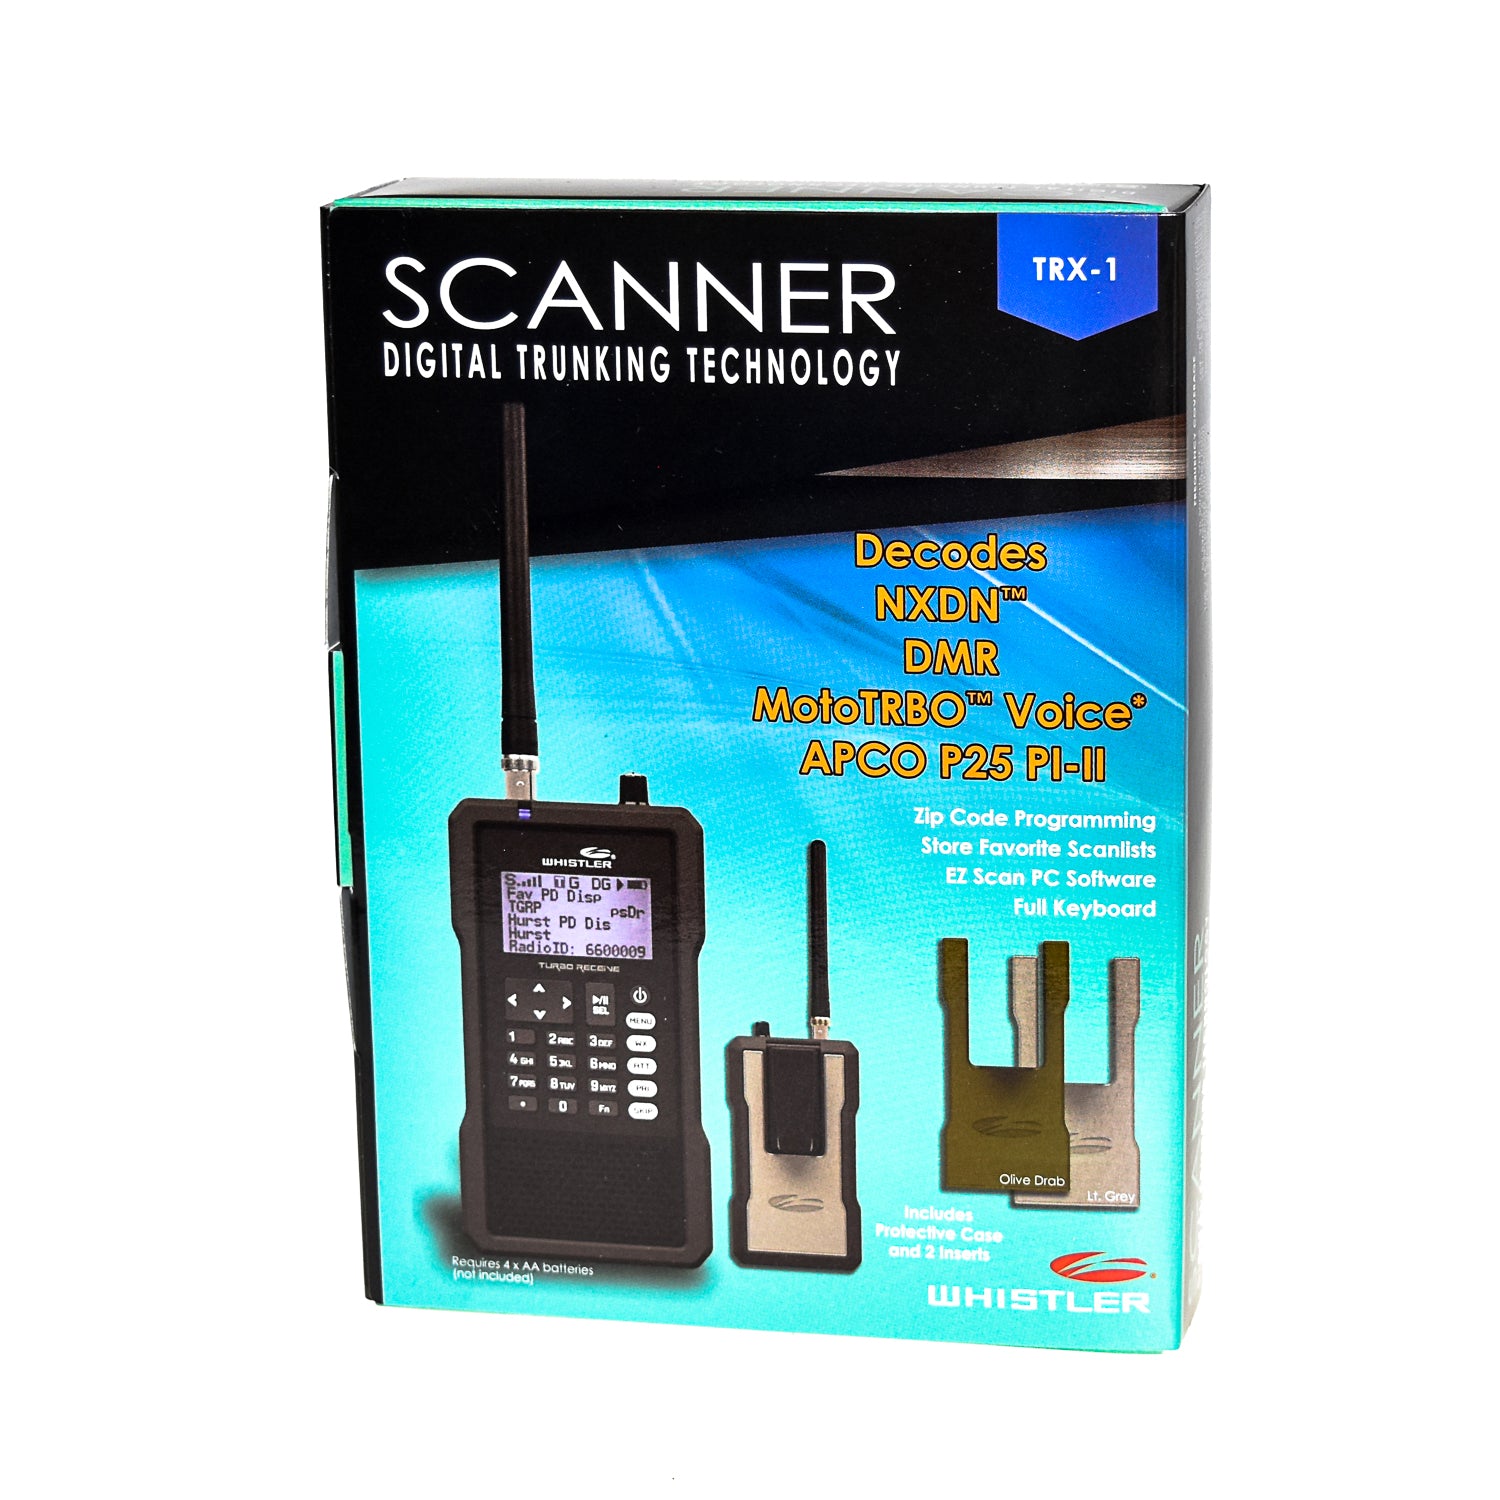 Whistler Digital Handheld Scanner Radio